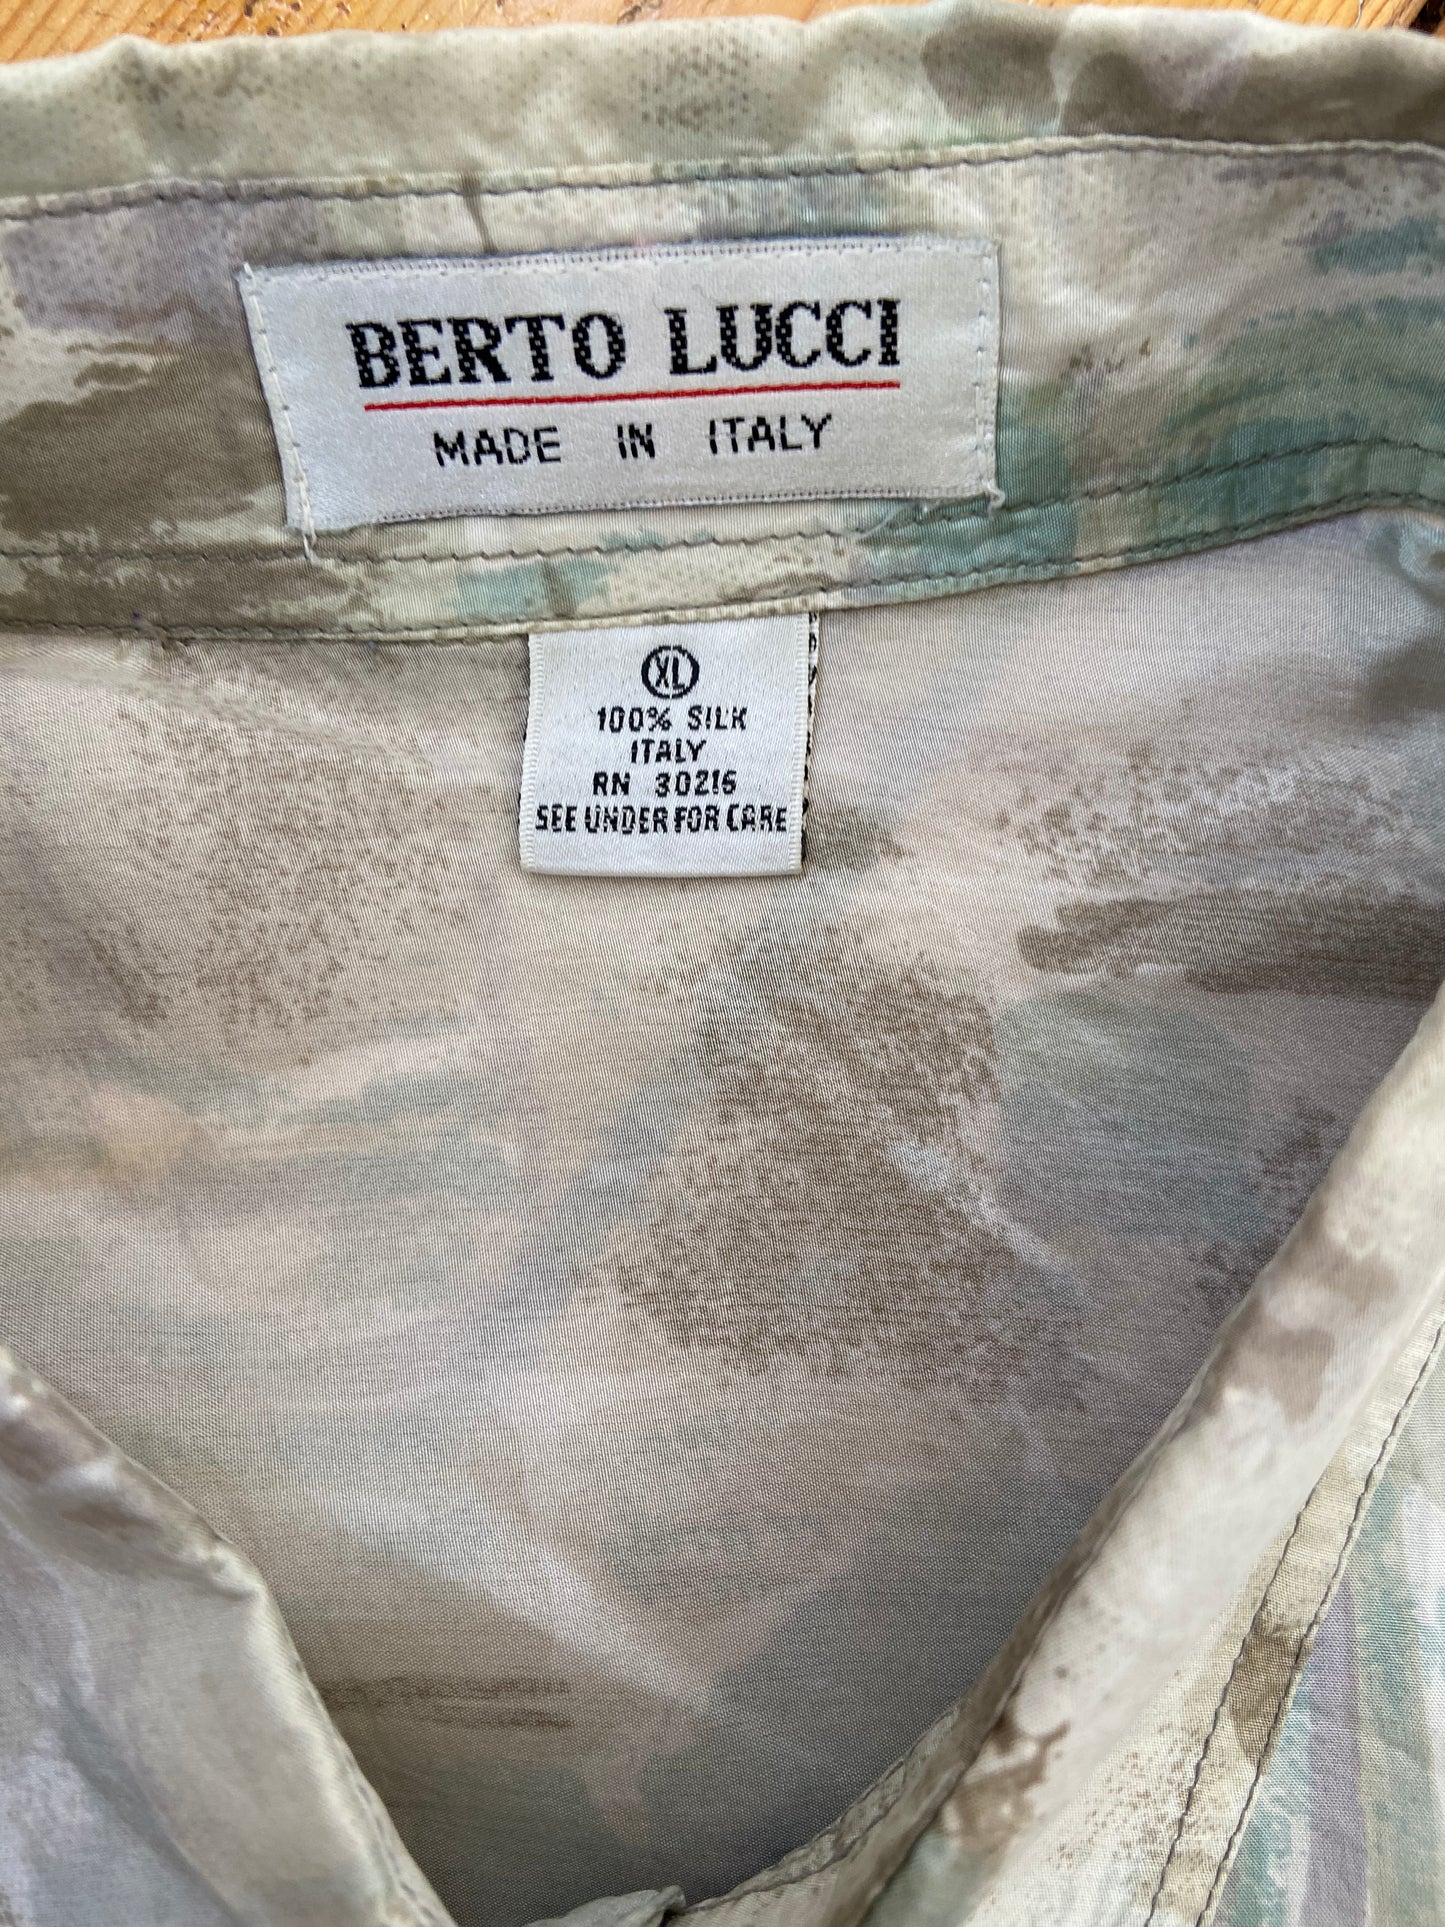 Berto Lucci silk shirt